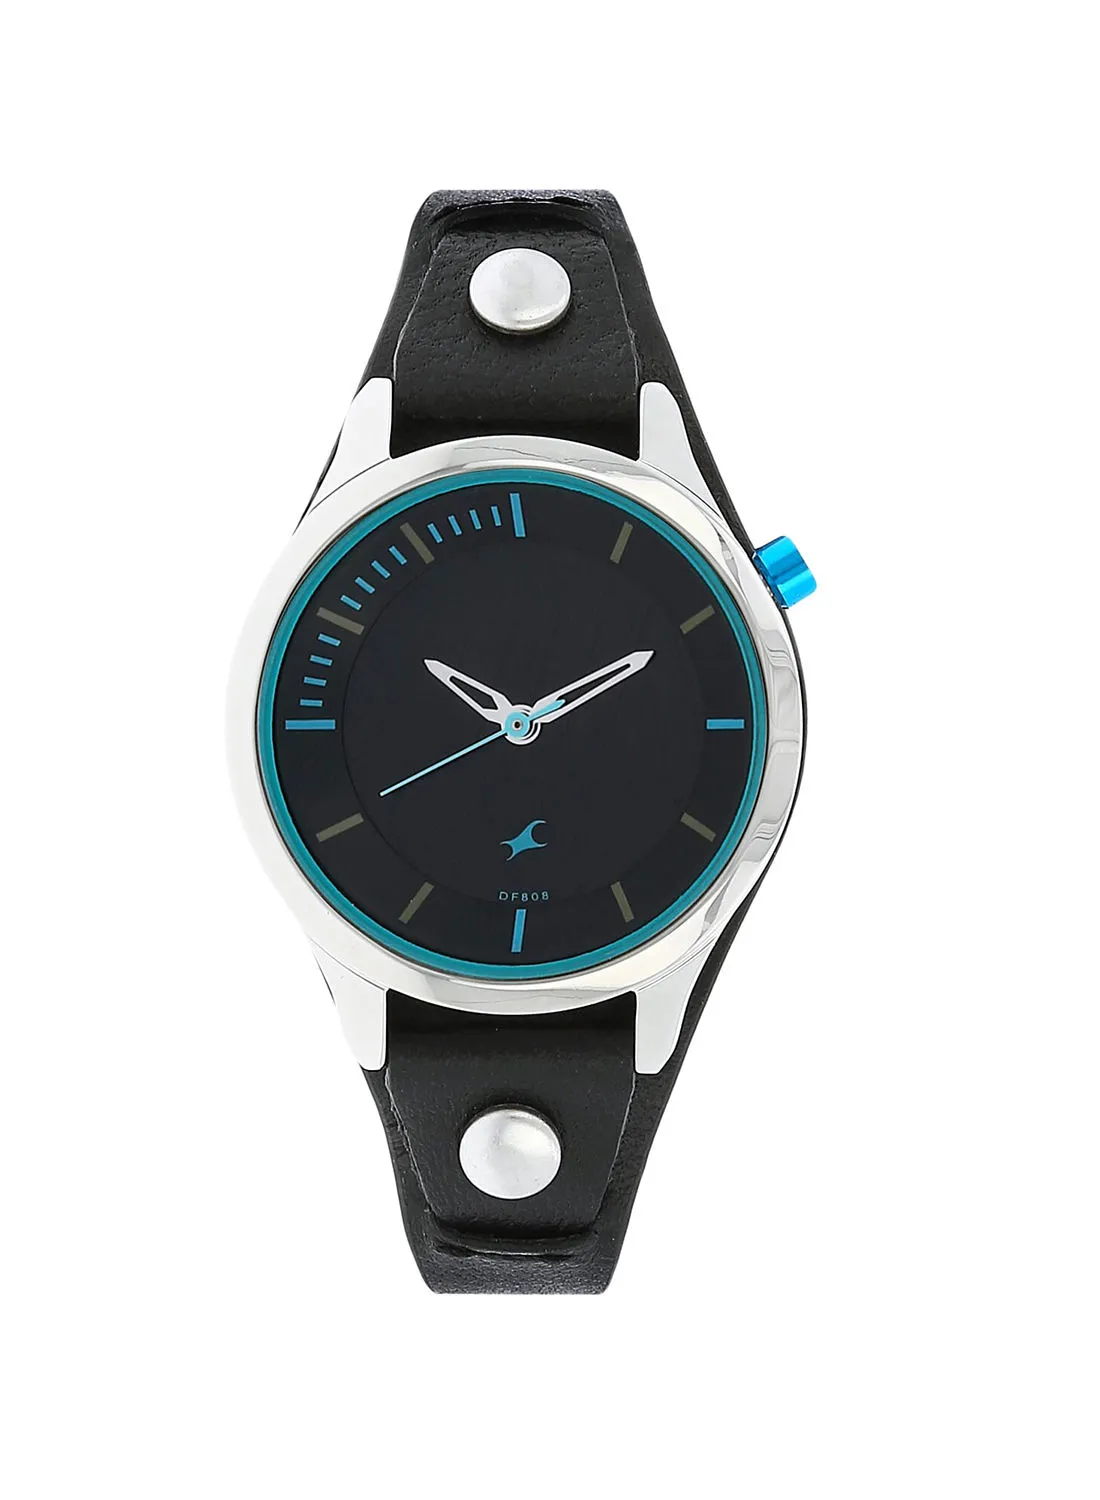 fastrack Leather Analog Wrist Watch 6156SL01